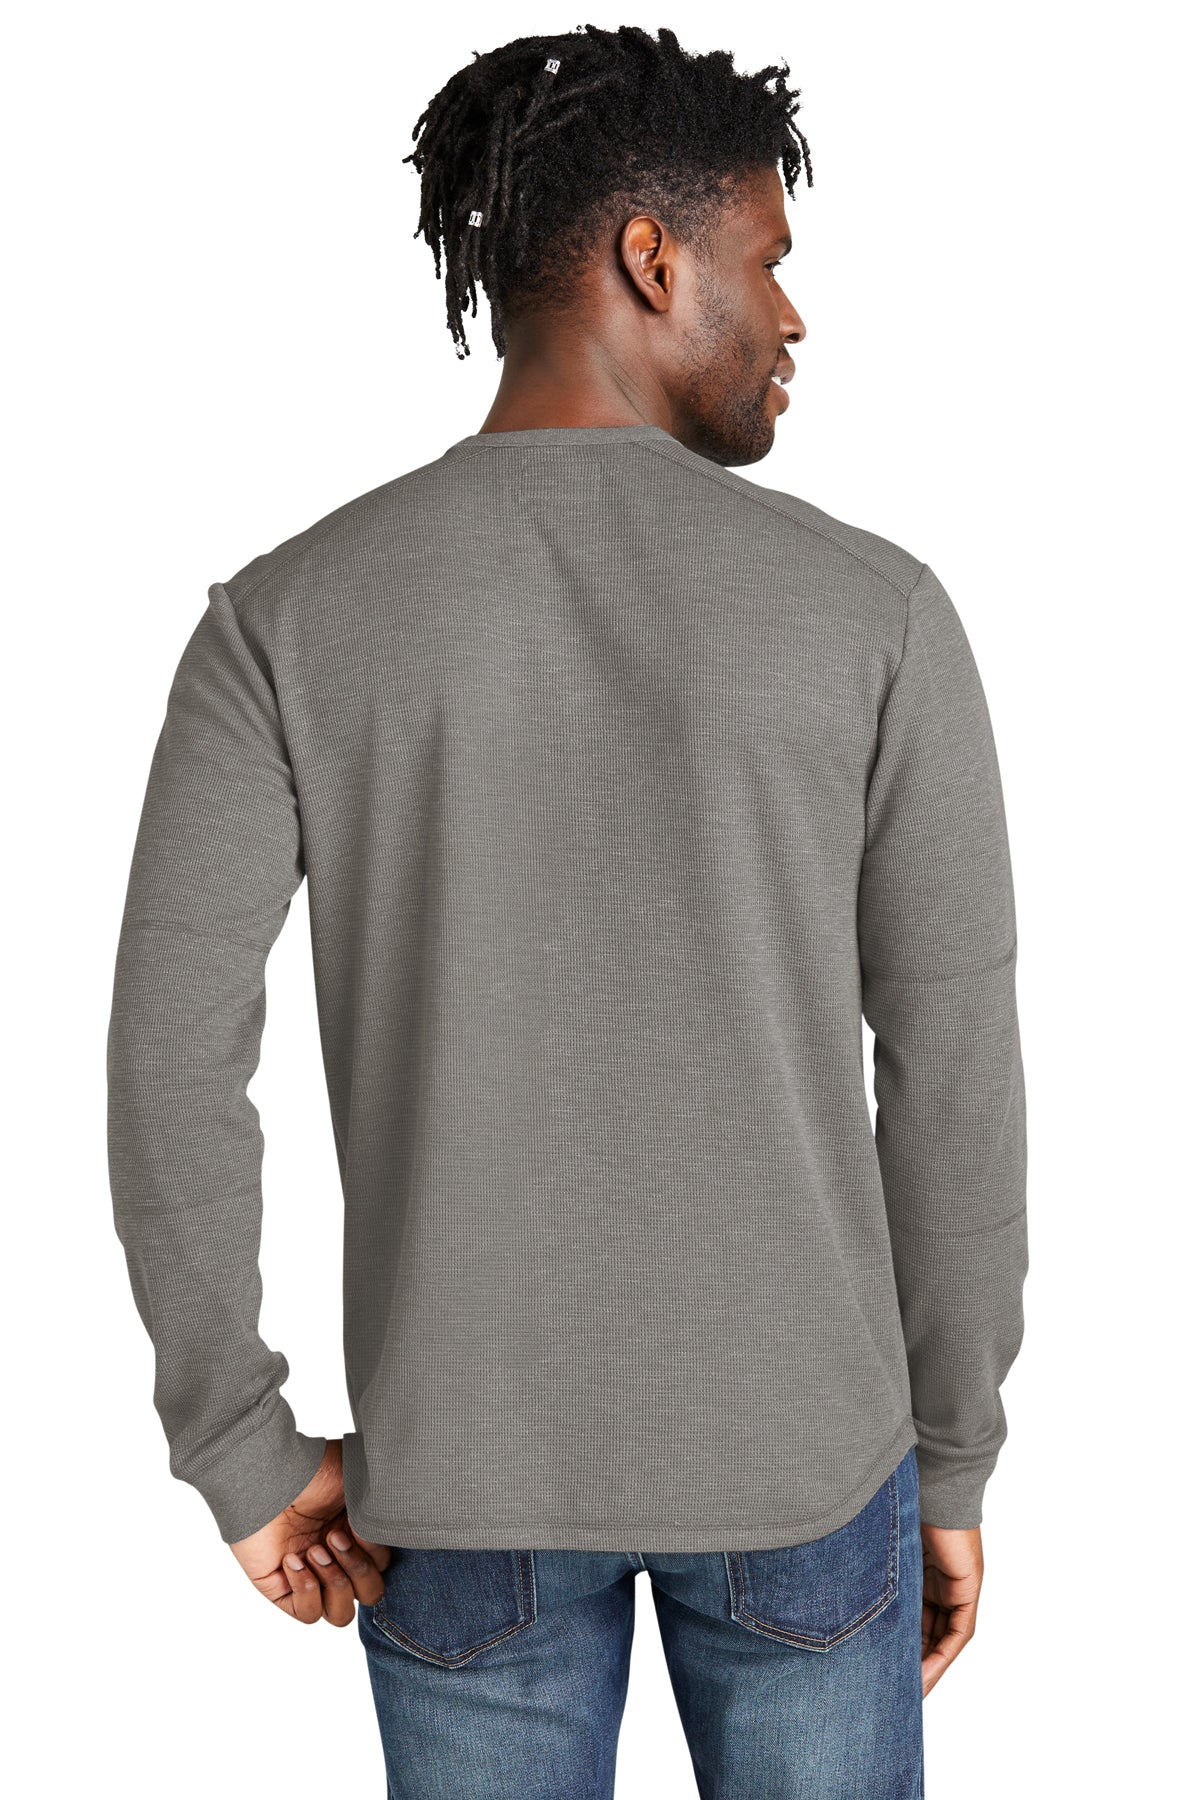 New Era Thermal Long Sleeve Custom T Shirts, Shadow Grey Heather